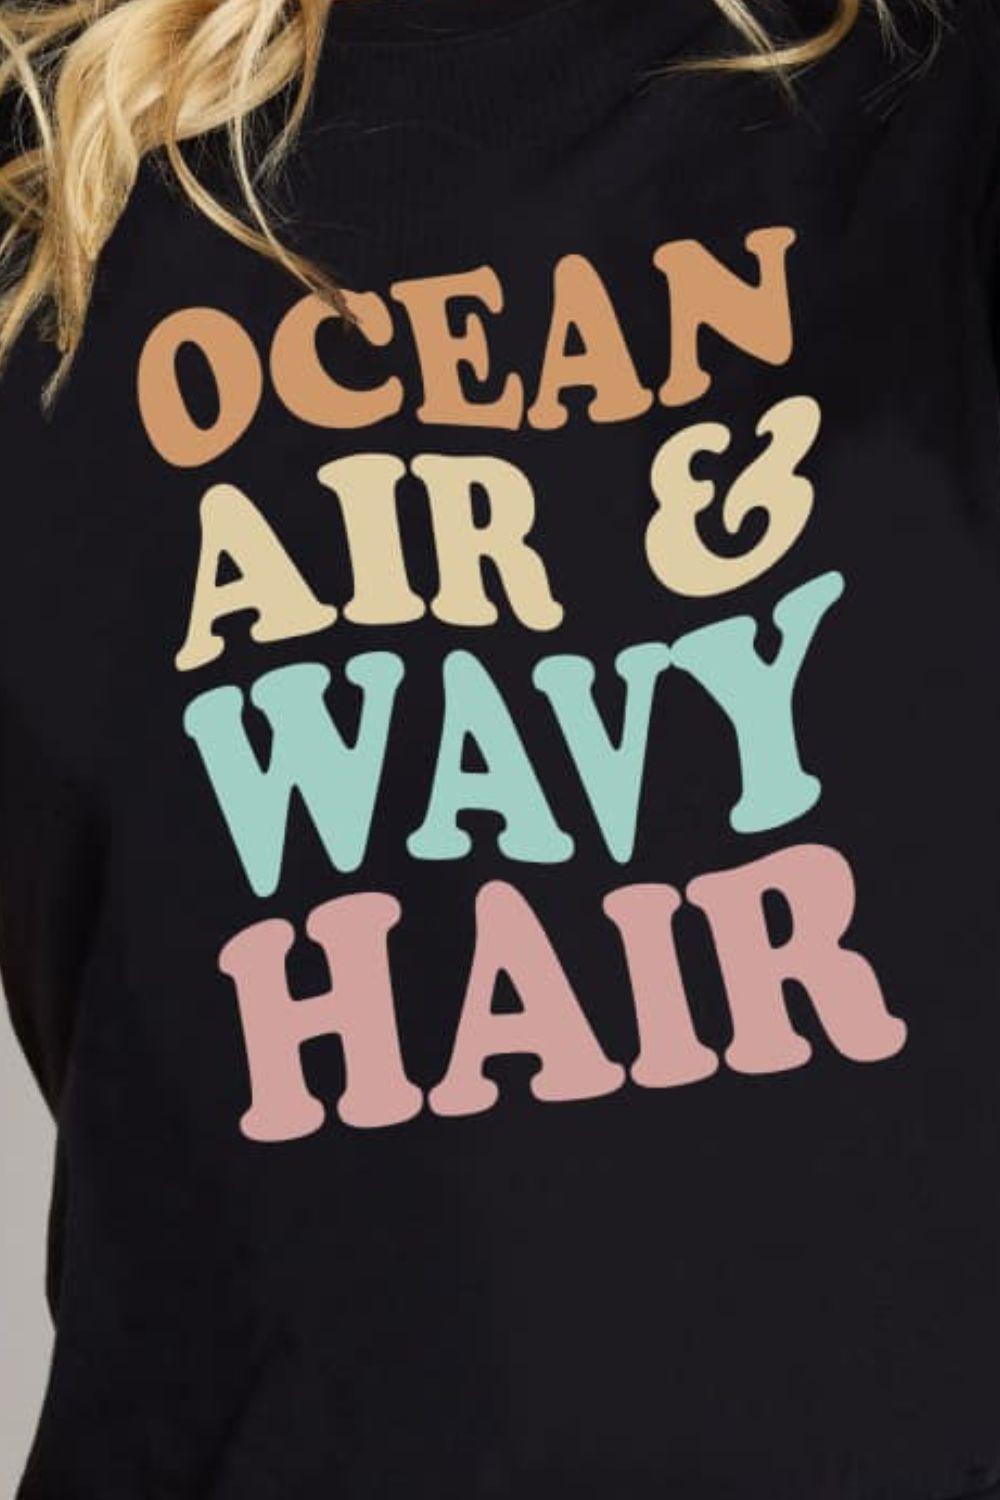 OCEAN AIR & WAVY HAIR Graphic T-Shirt - Olive Ave